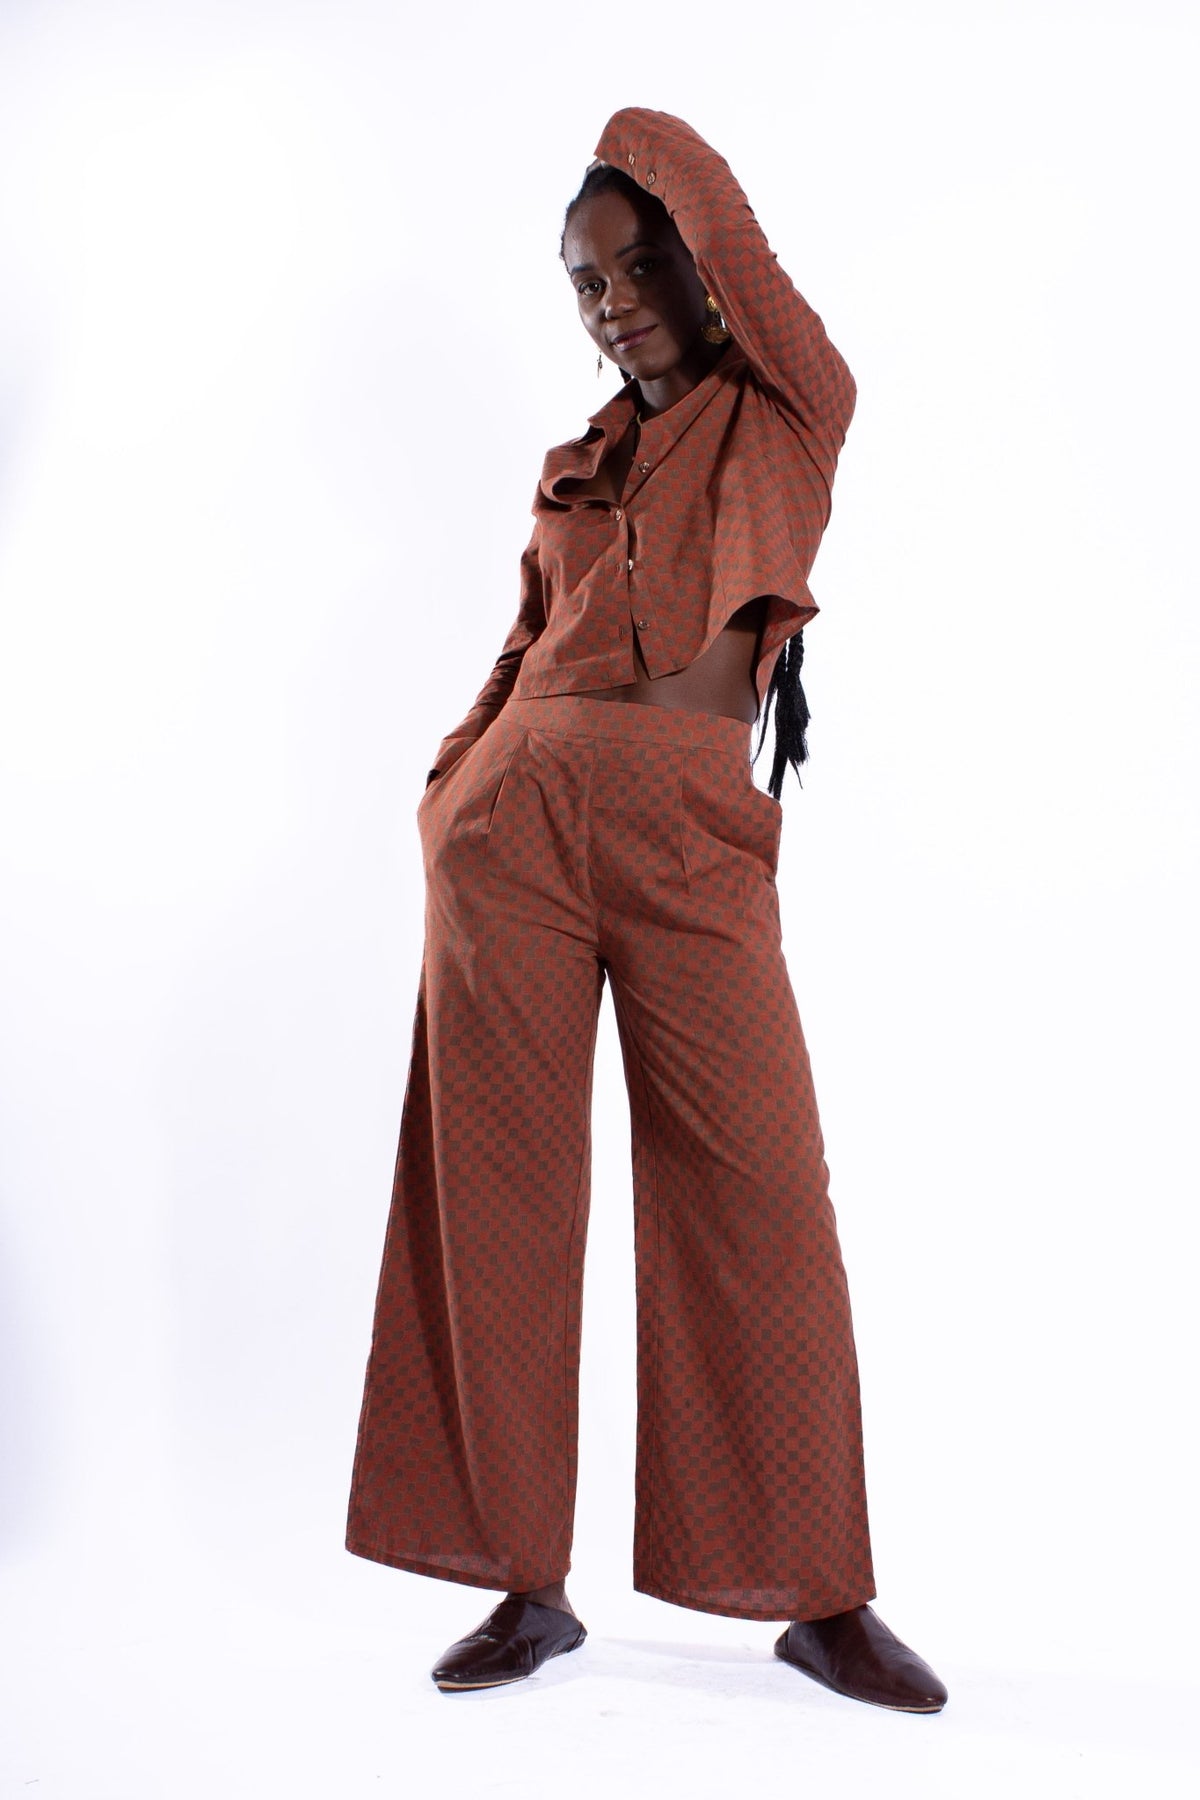 Pantalon SAGARA - Coton revalorisé - Imprimé Ajrack - Pantalon - Azaadi, la mode responsable accessible